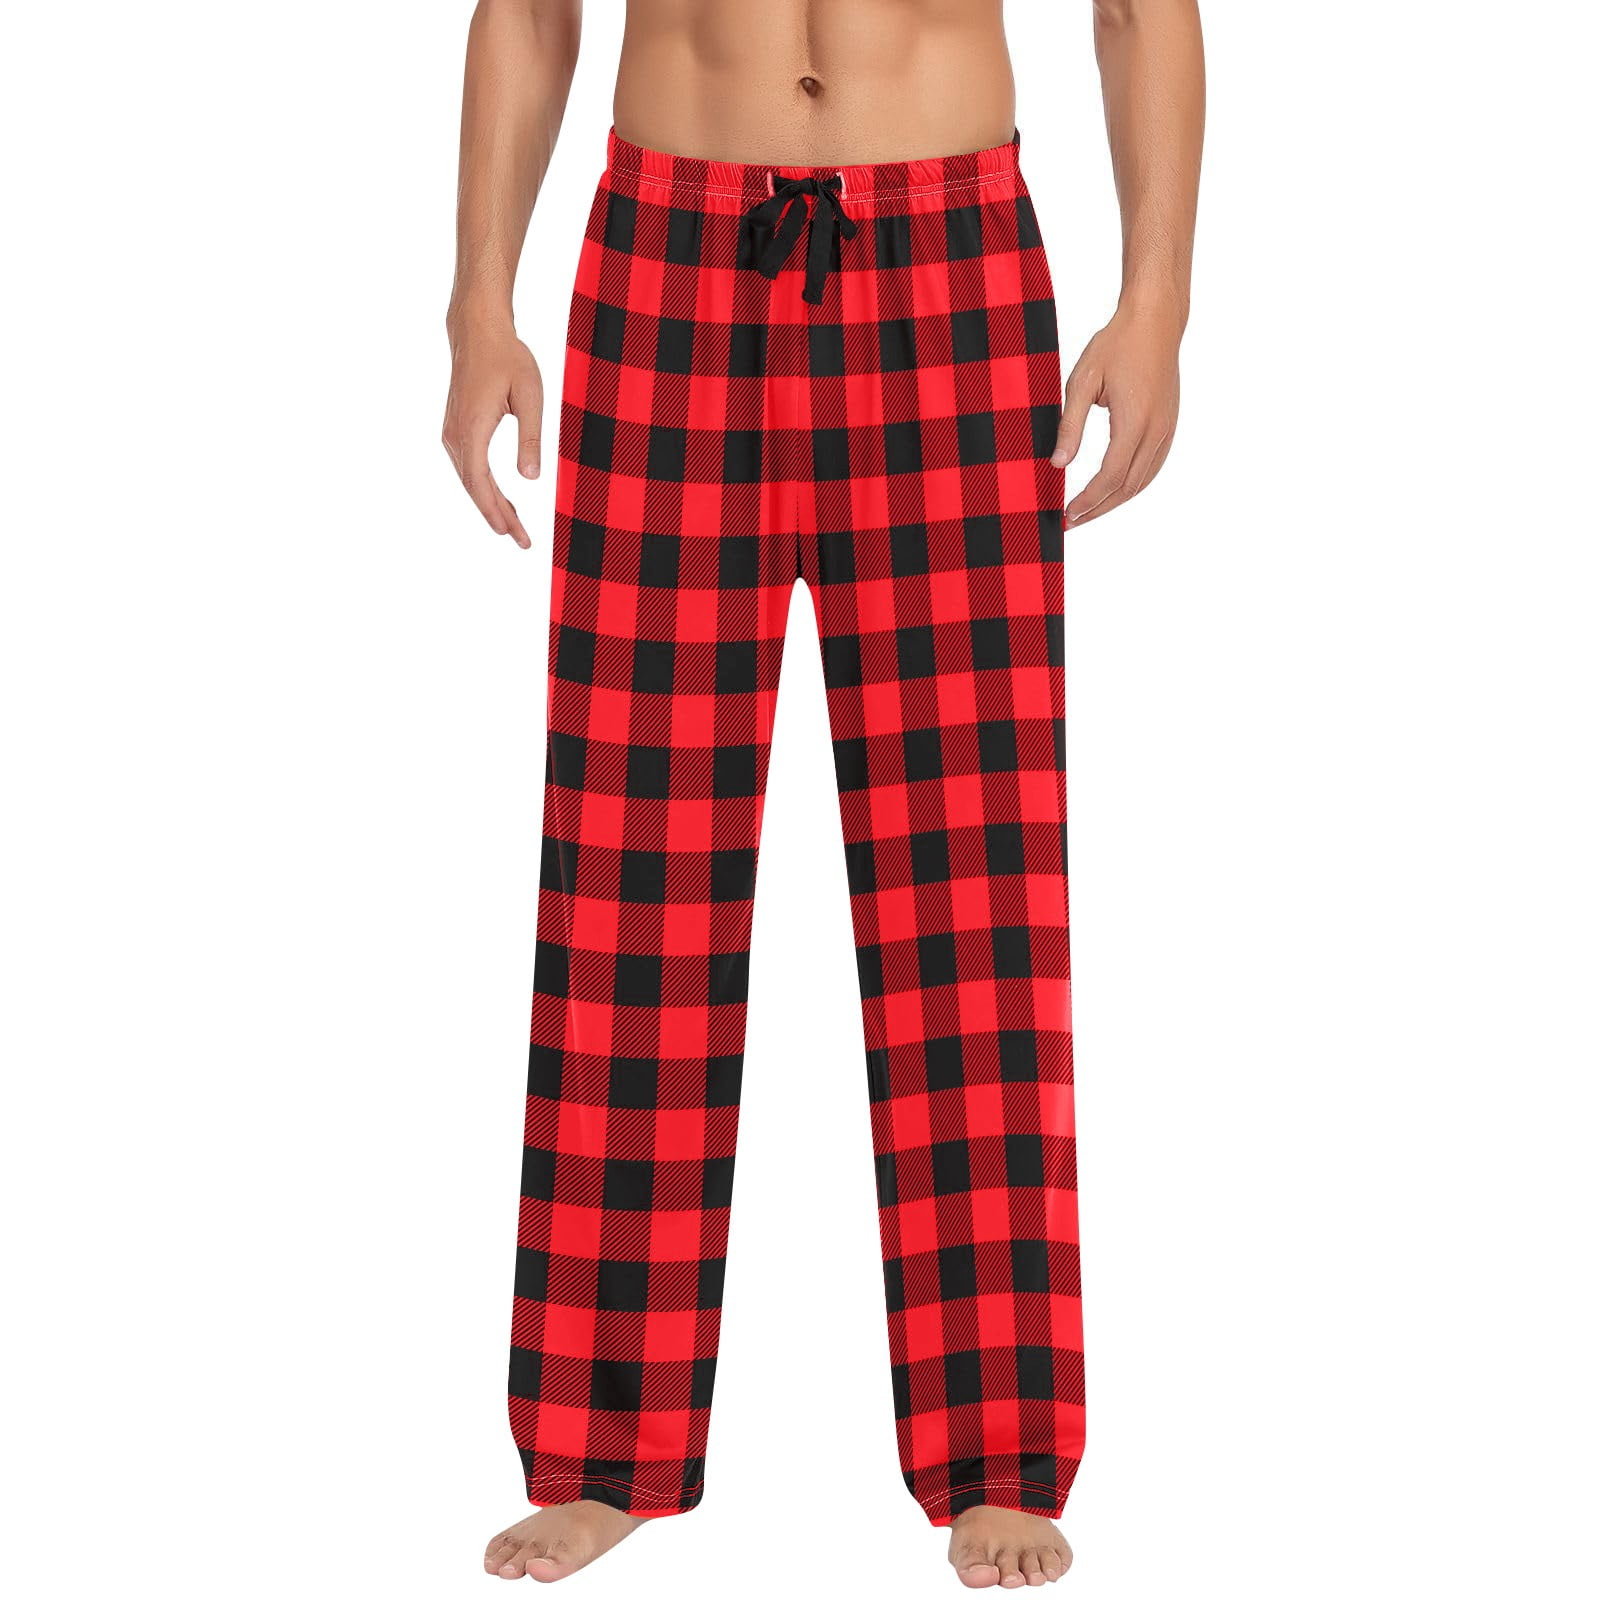 Knosfe Red and Black Pajama Pants Buffalo Plaid Wide Leg Casual Pj ...